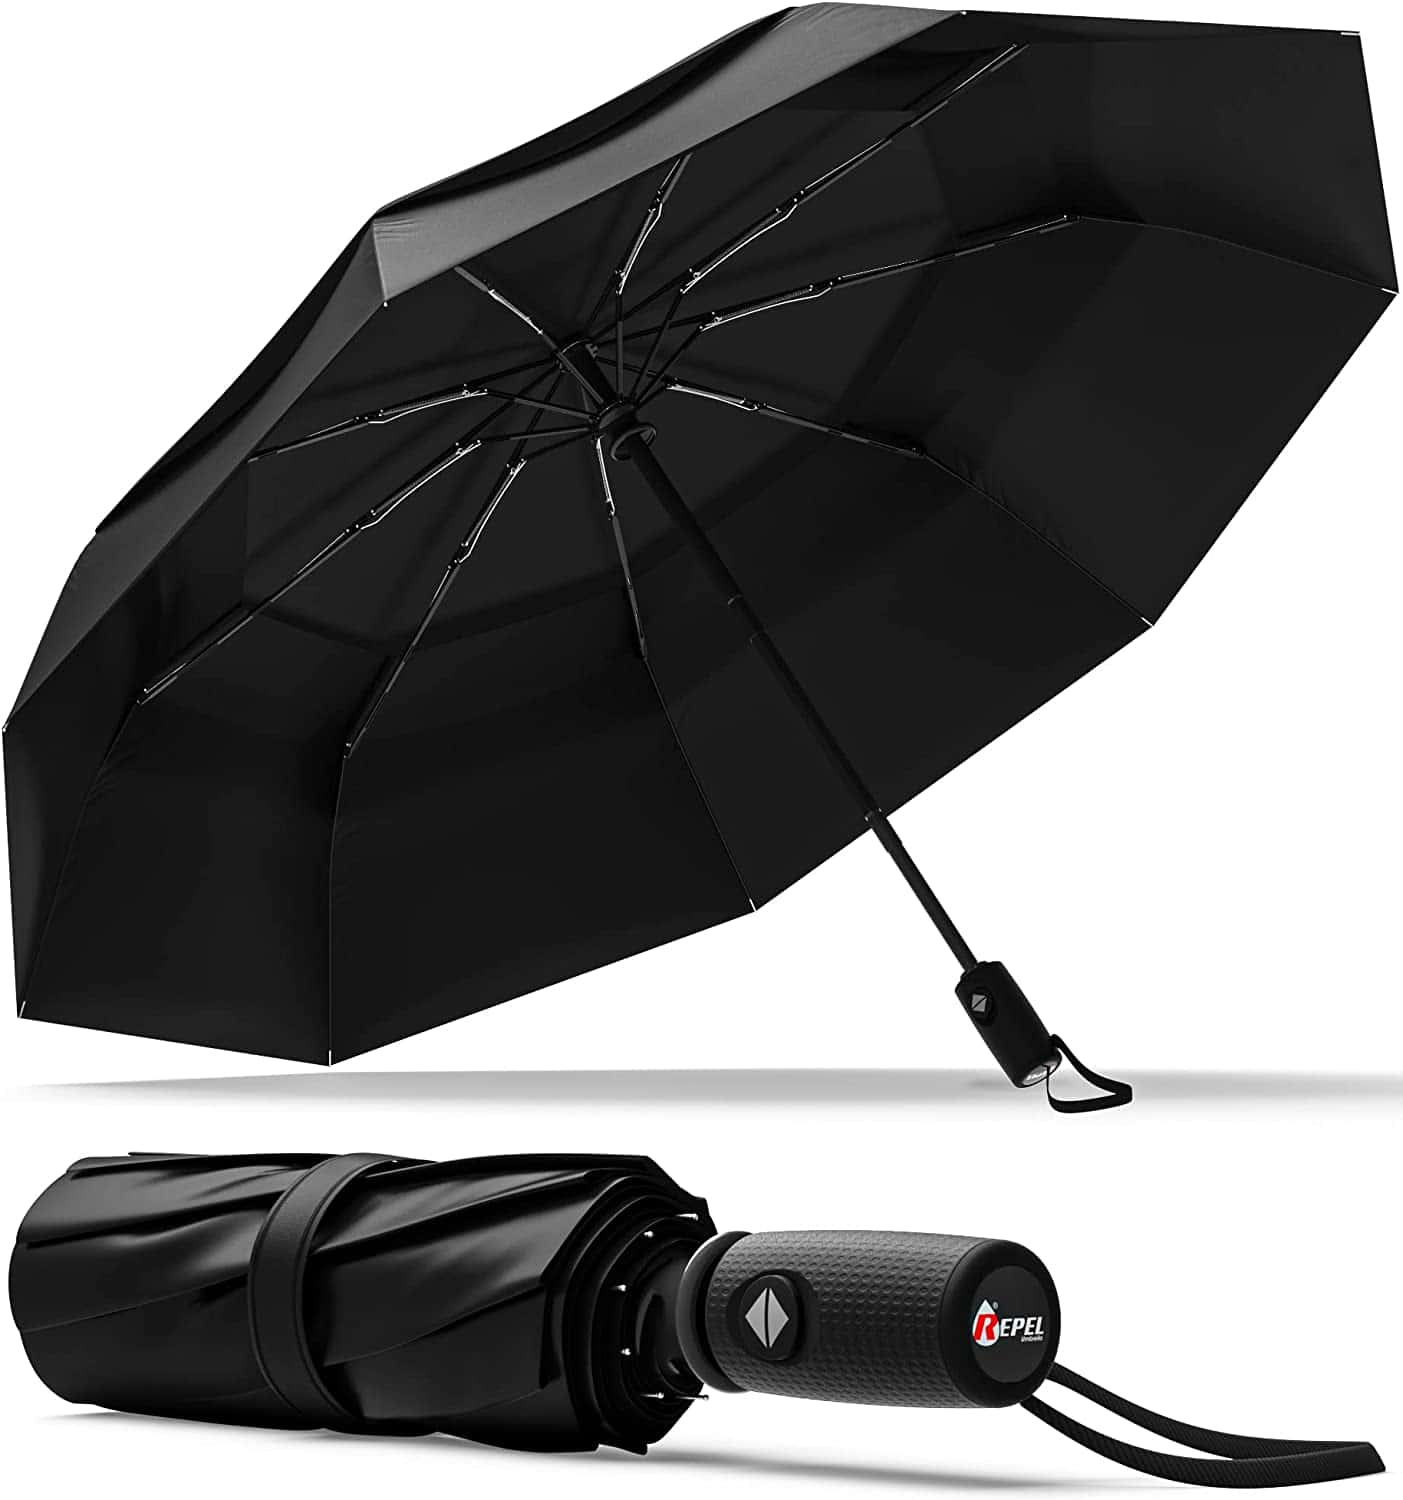 Digital nomad checklist repel travel umbrella